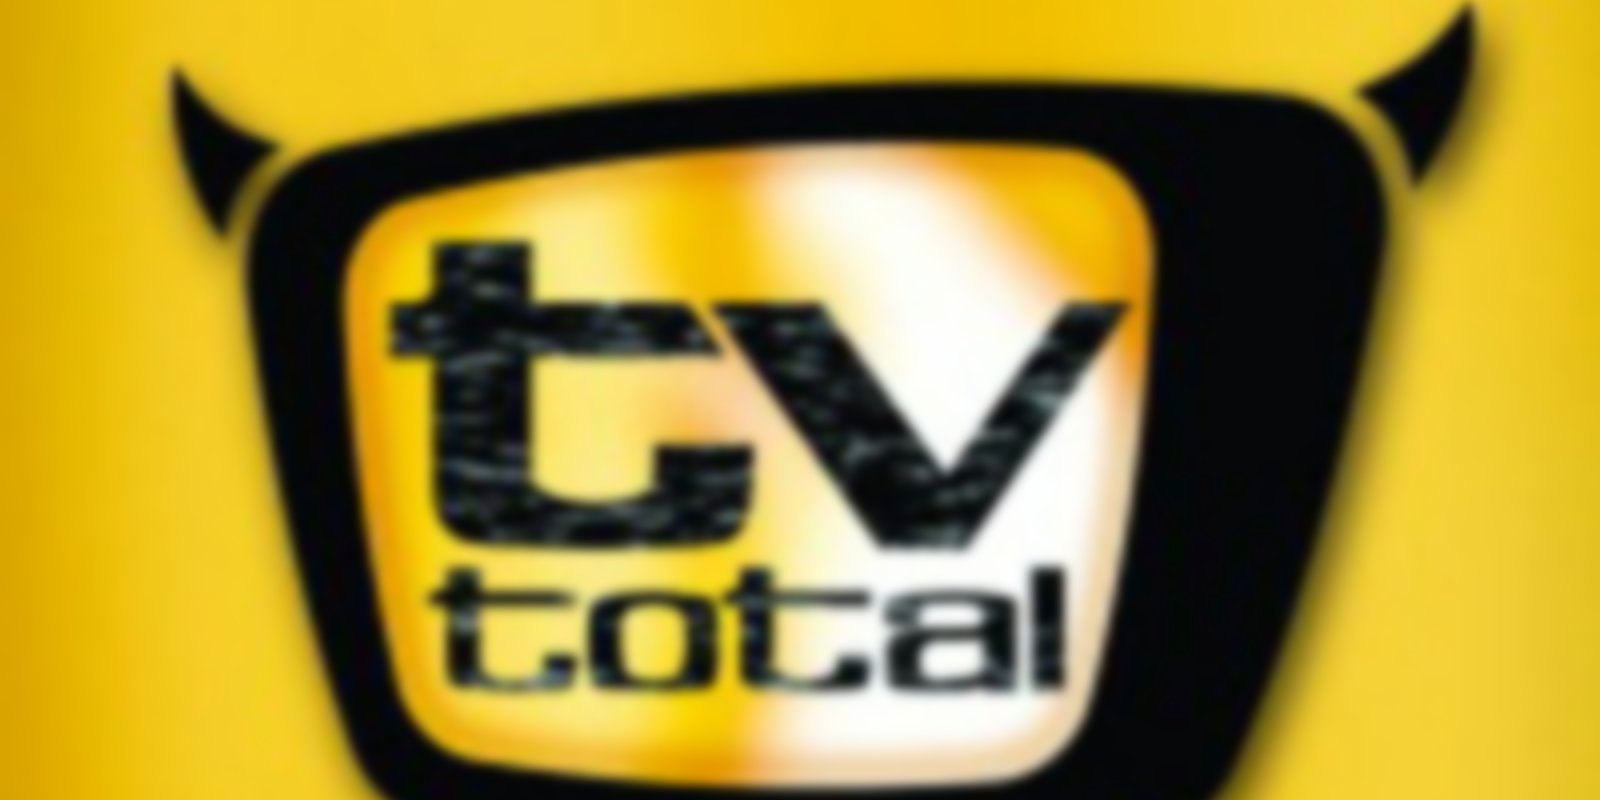 Best of TV Total - Volume 1